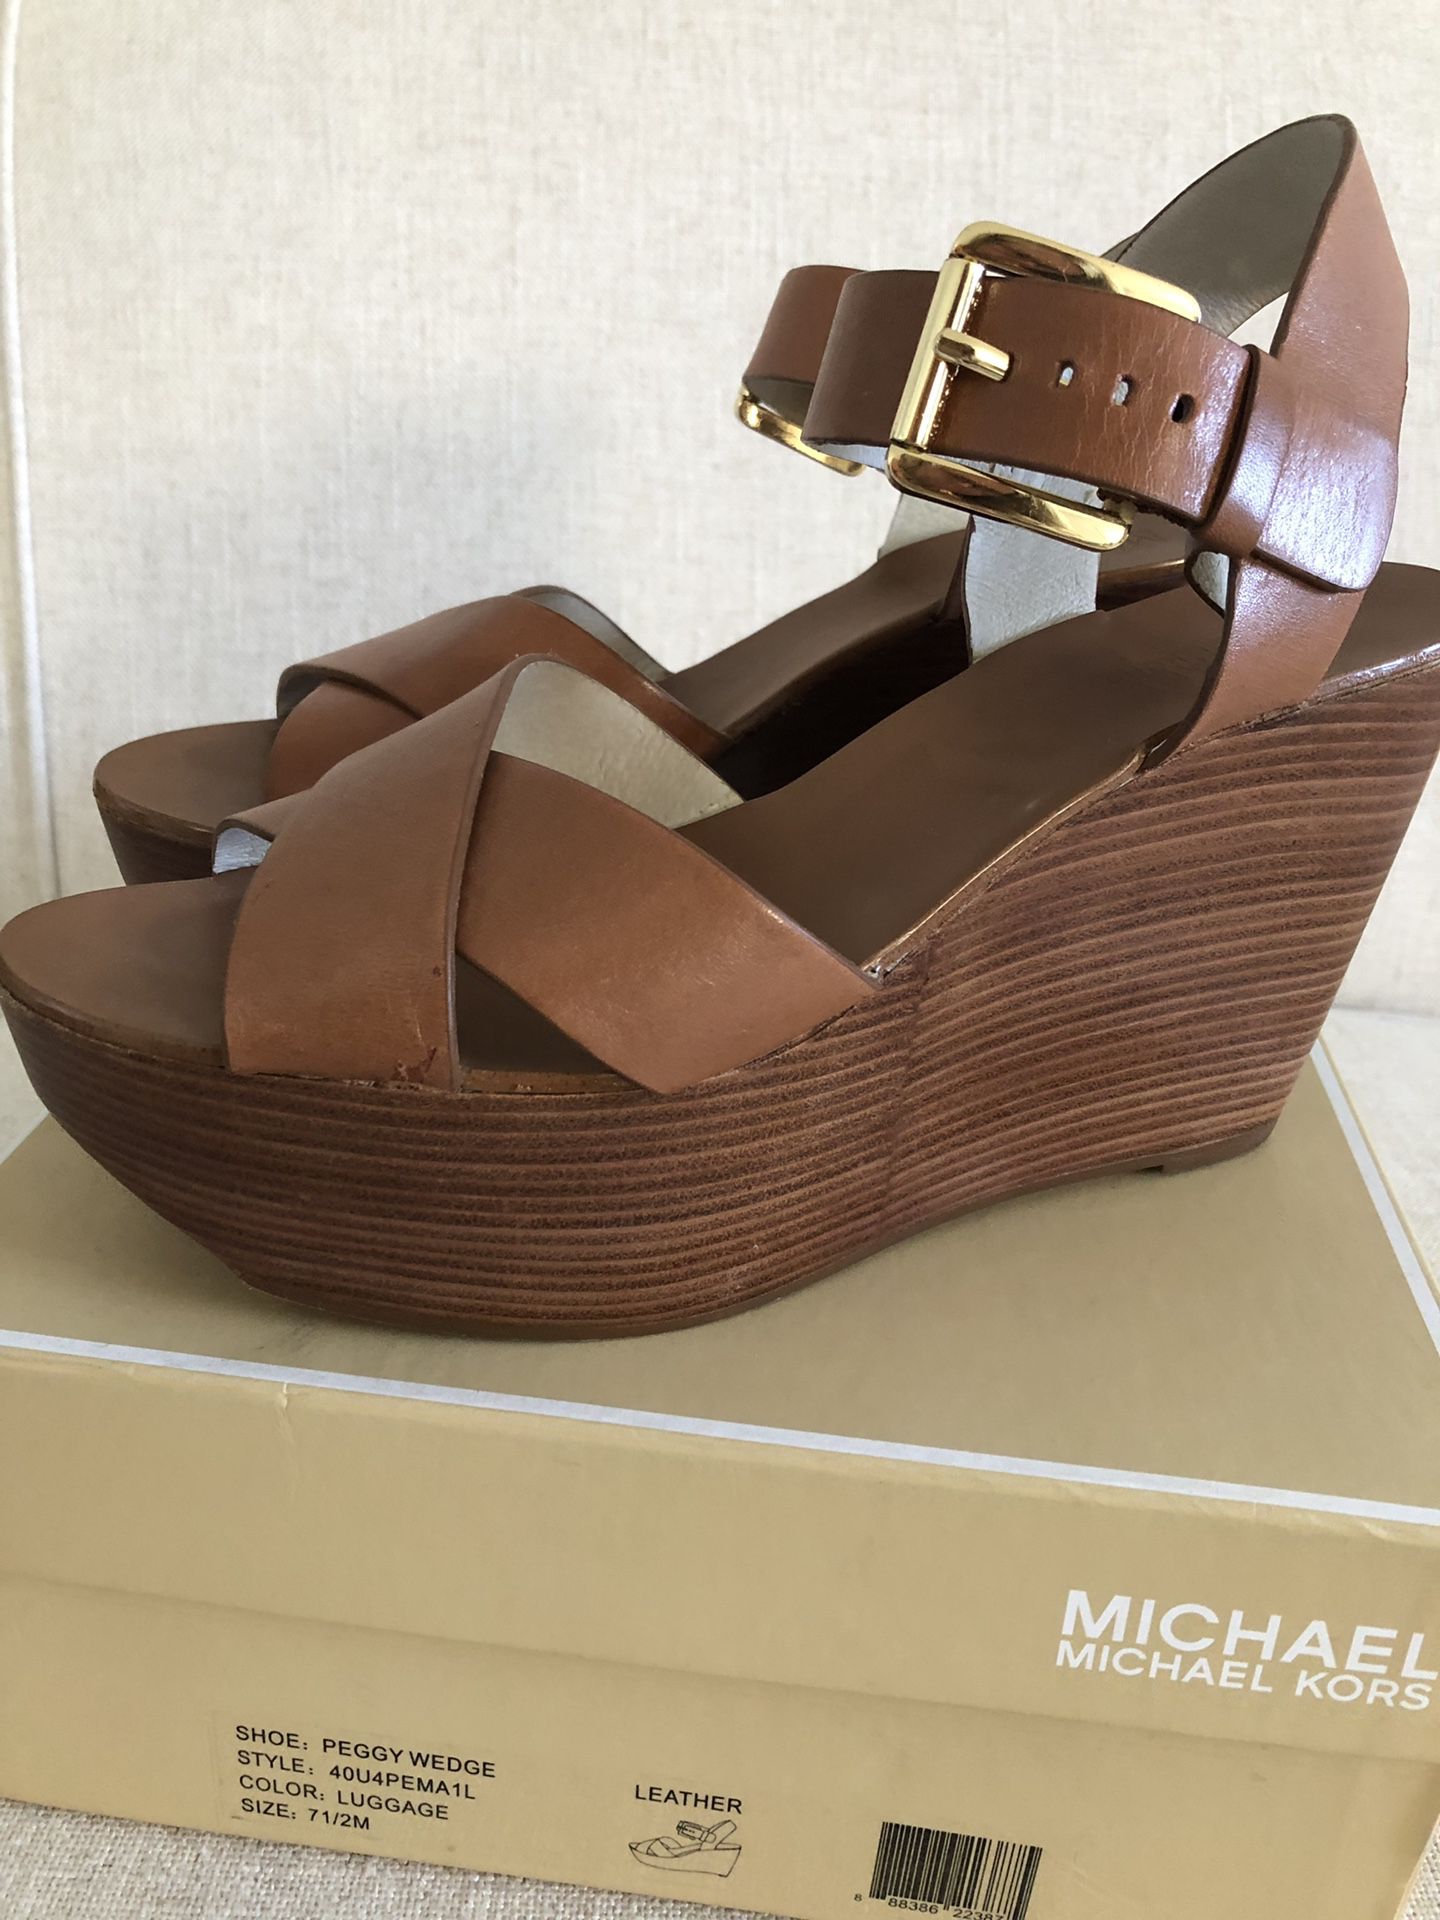 Michael Kors Wedge Sandal Size 7.5